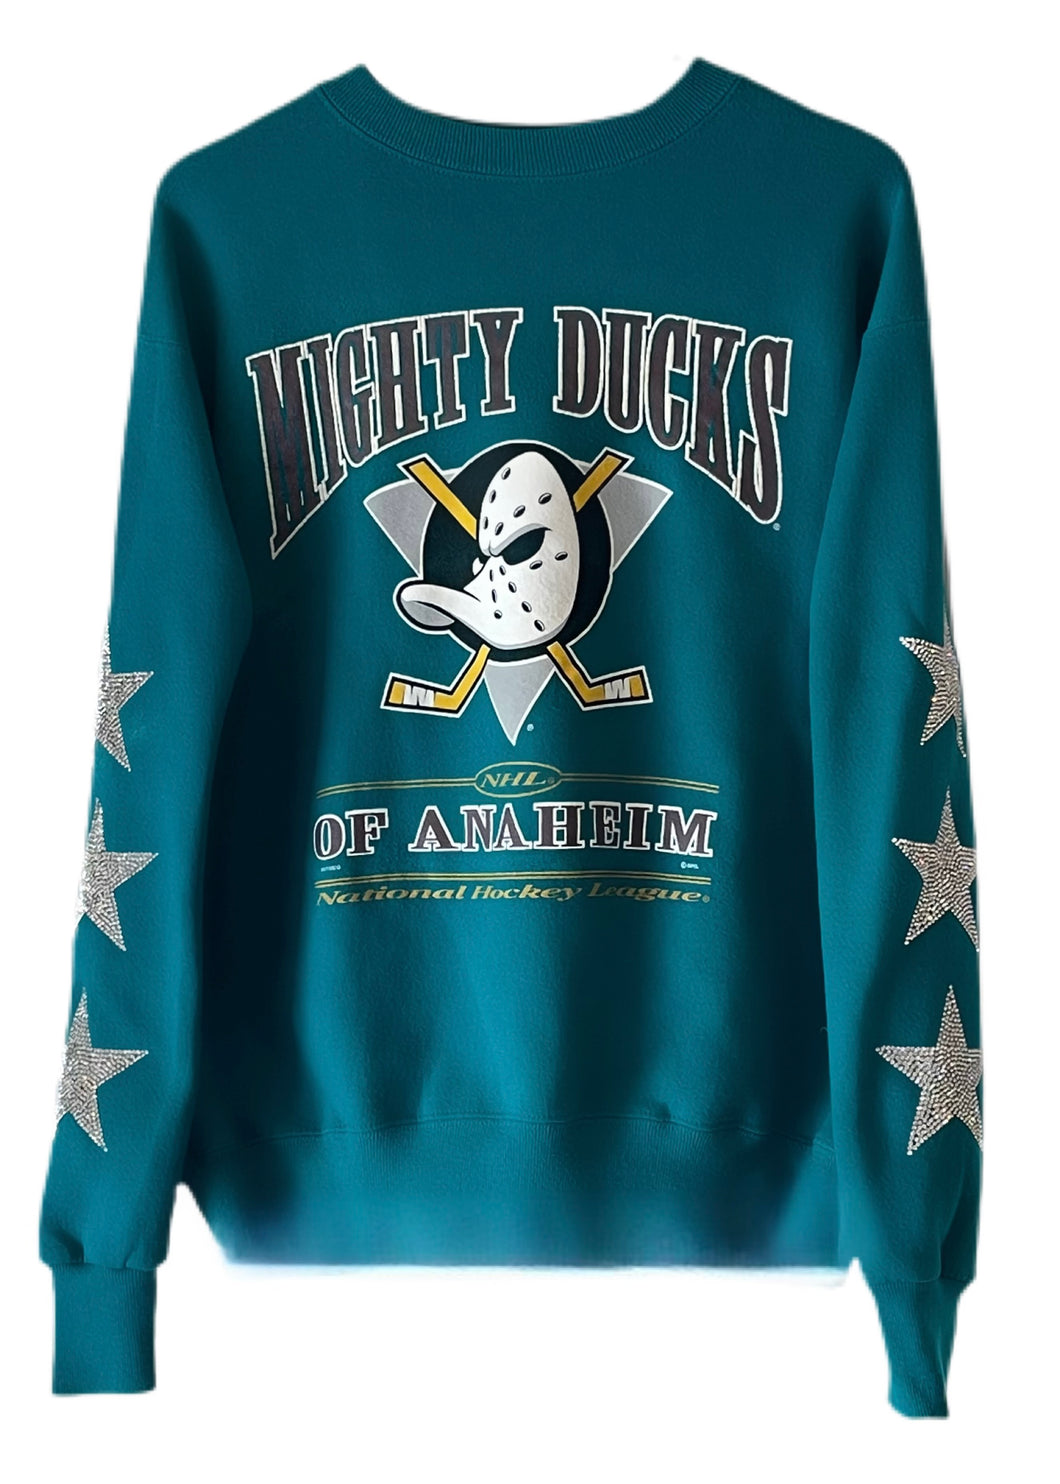 Anaheim Ducks, NHL “Rare Find” One of a KIND Vintage “Mighty Ducks” Sweatshirt with Three Crystal Star Design